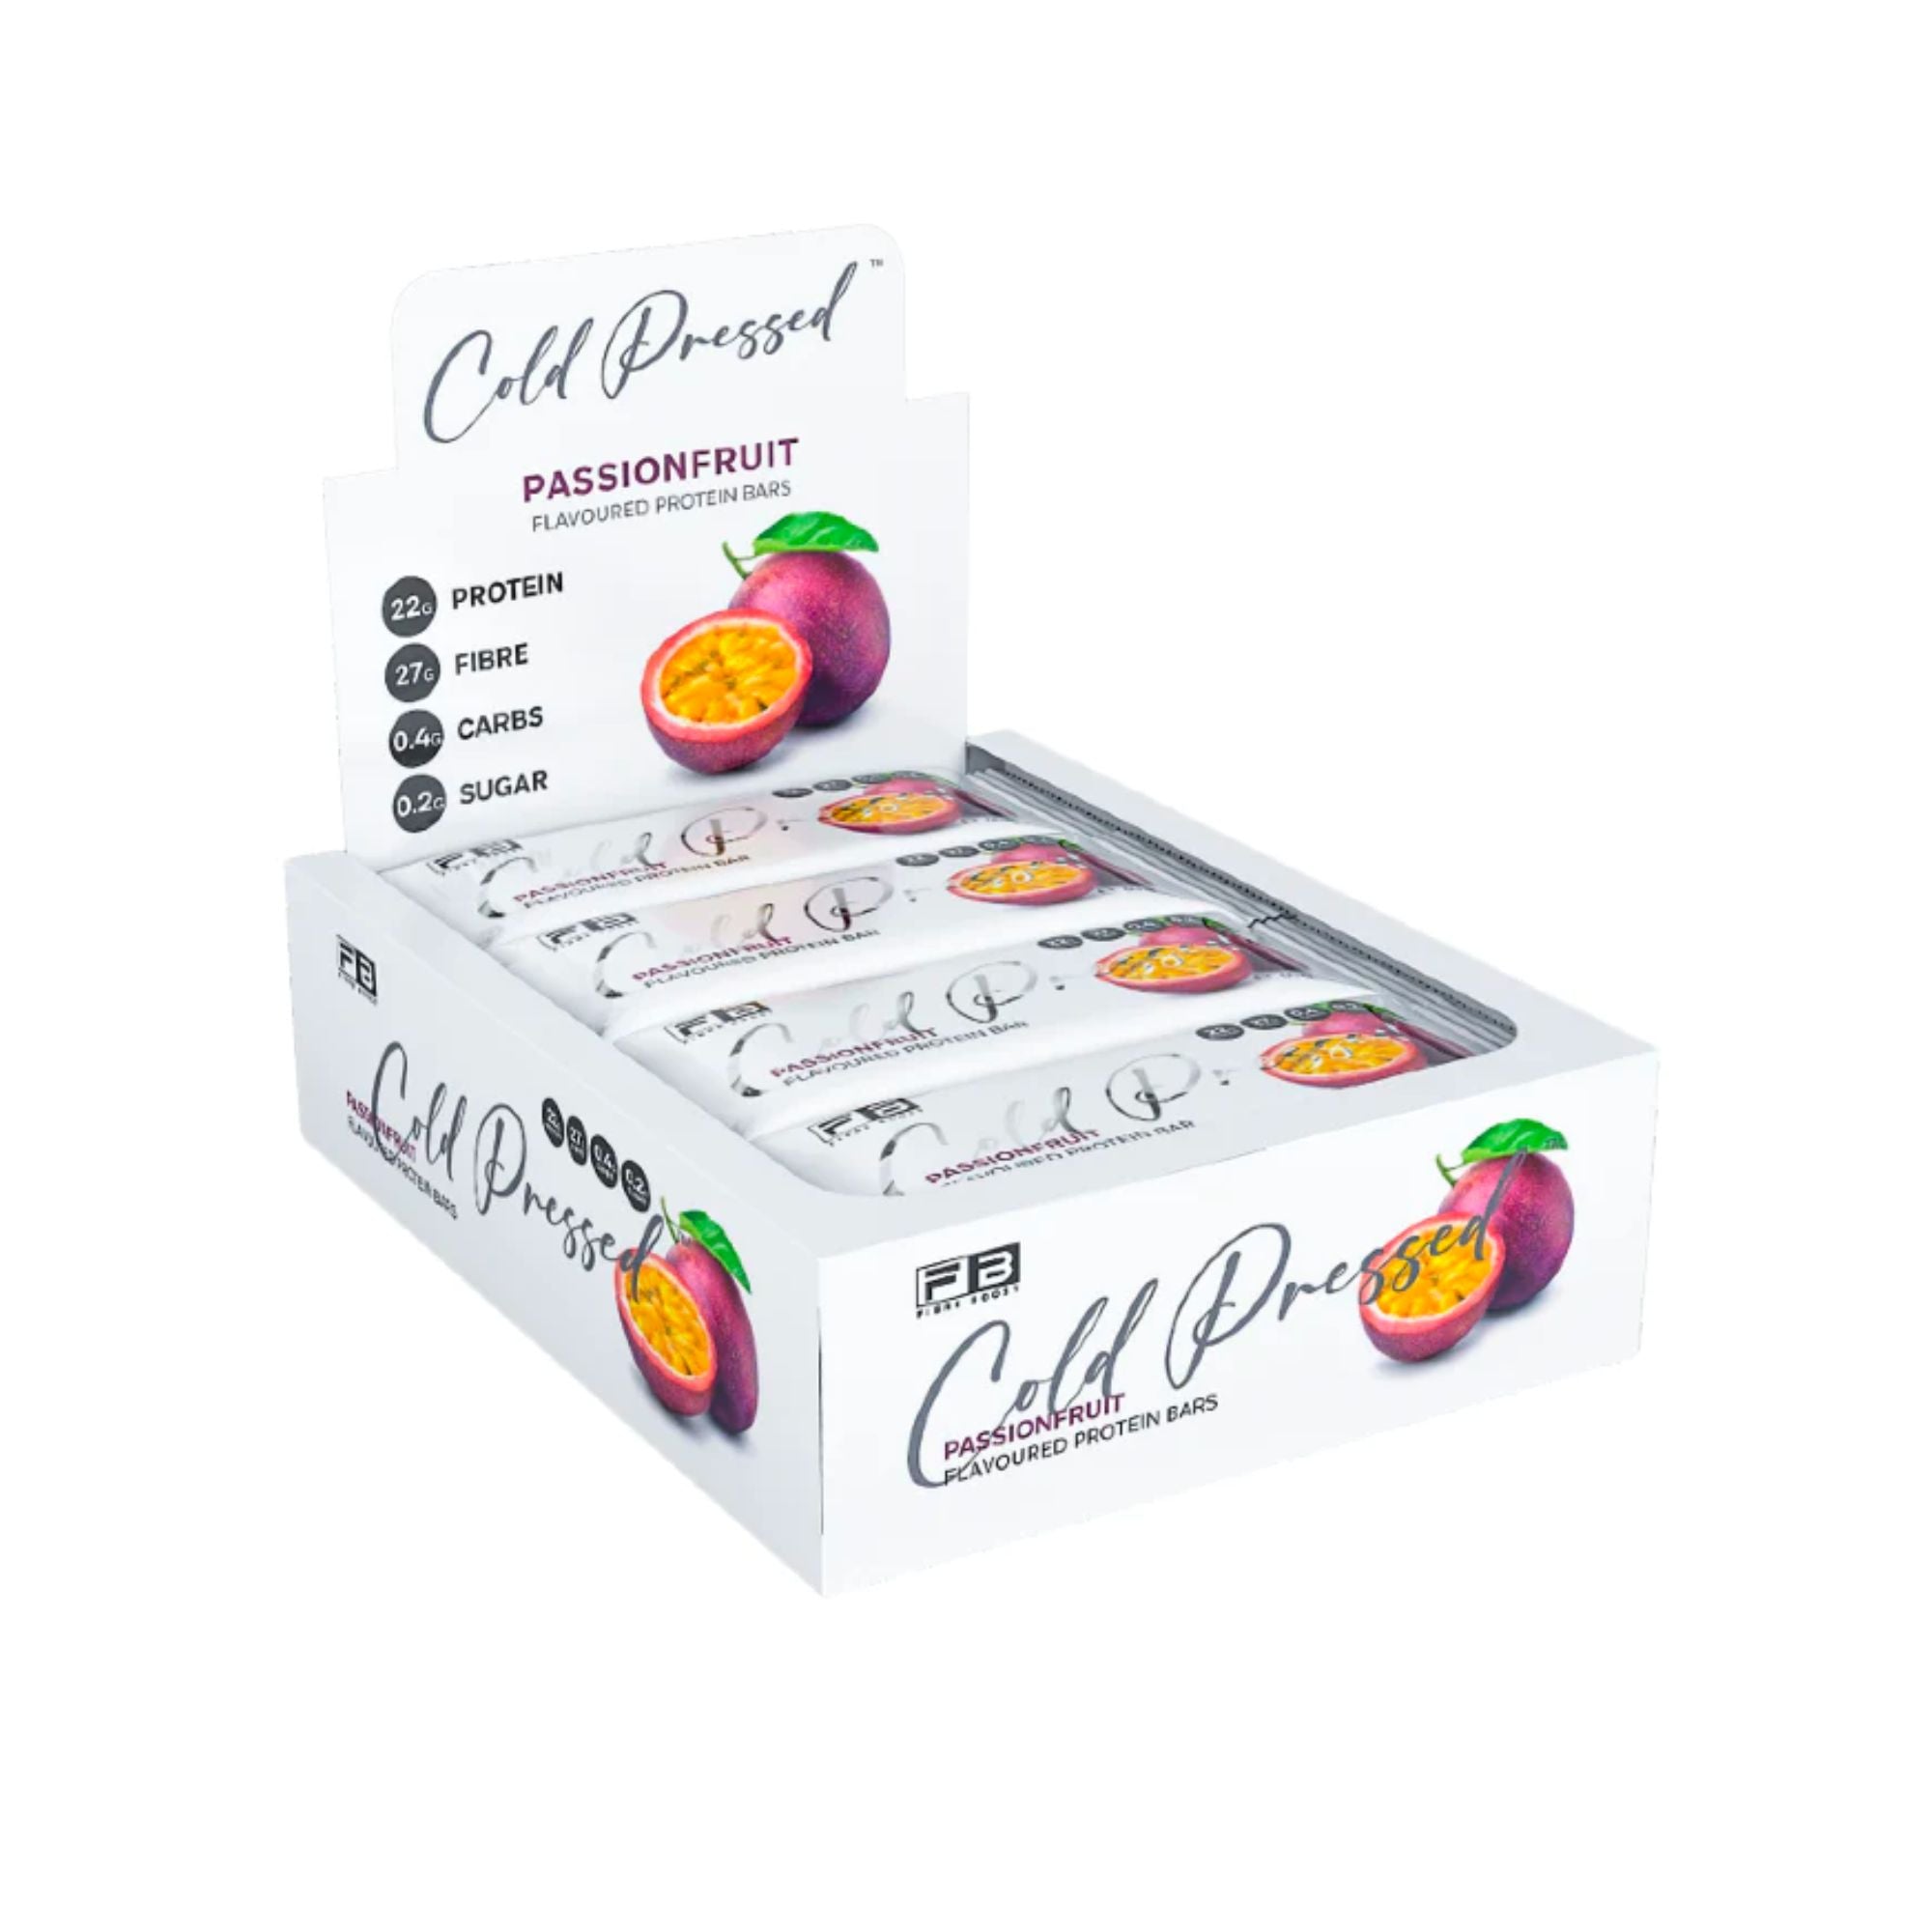 Fibre Boost Cold Pressed Bars - Box of 12 Passionfruit